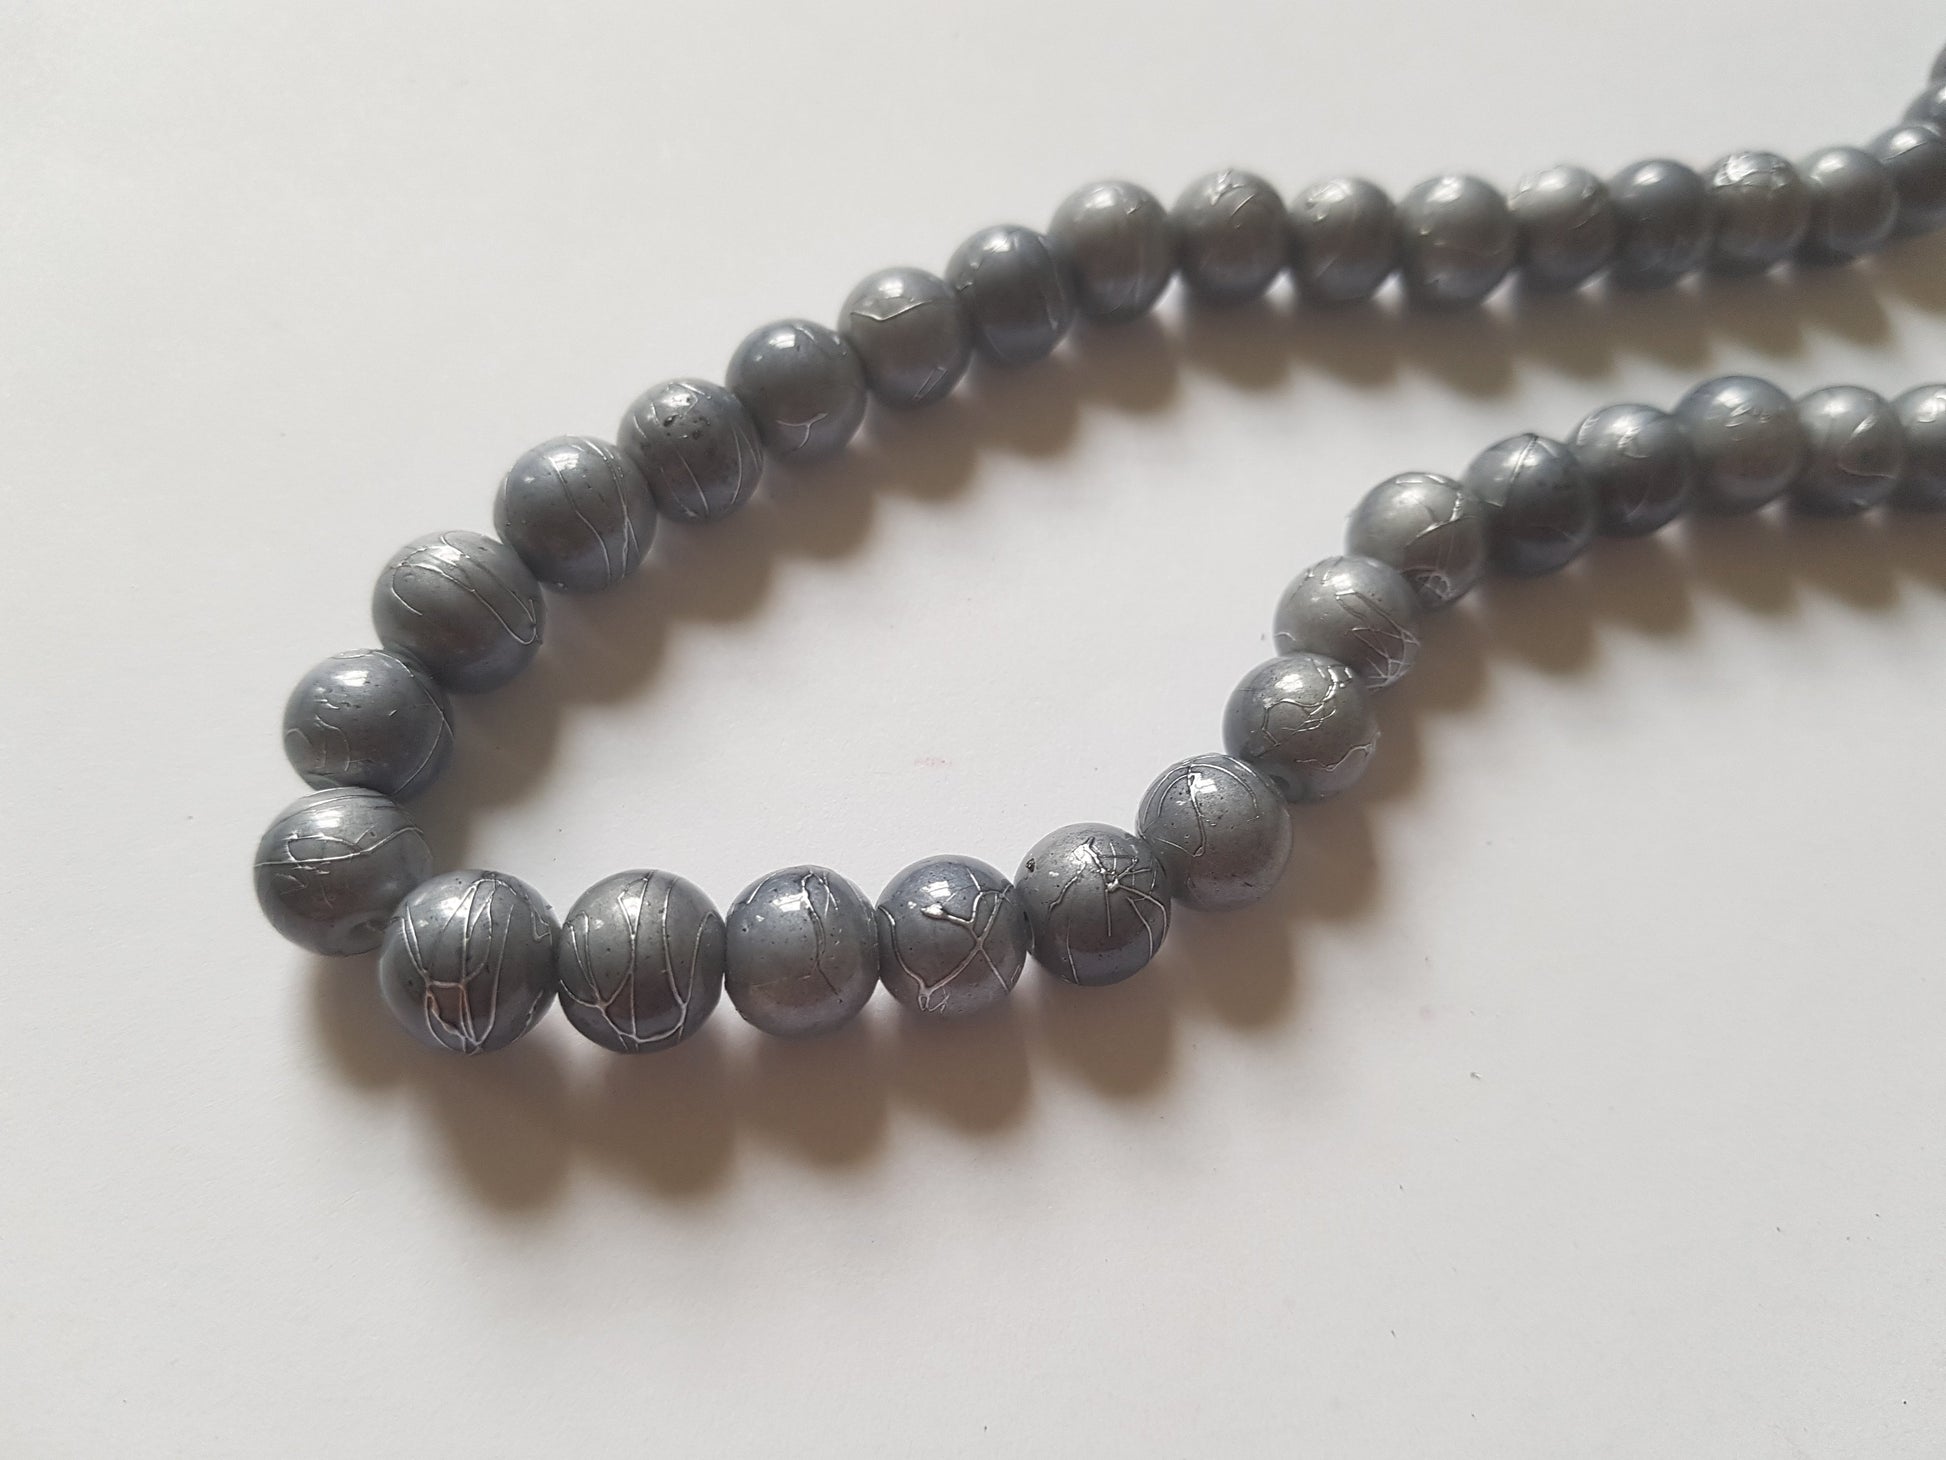 8mm metallic drawbench glass beads - silver